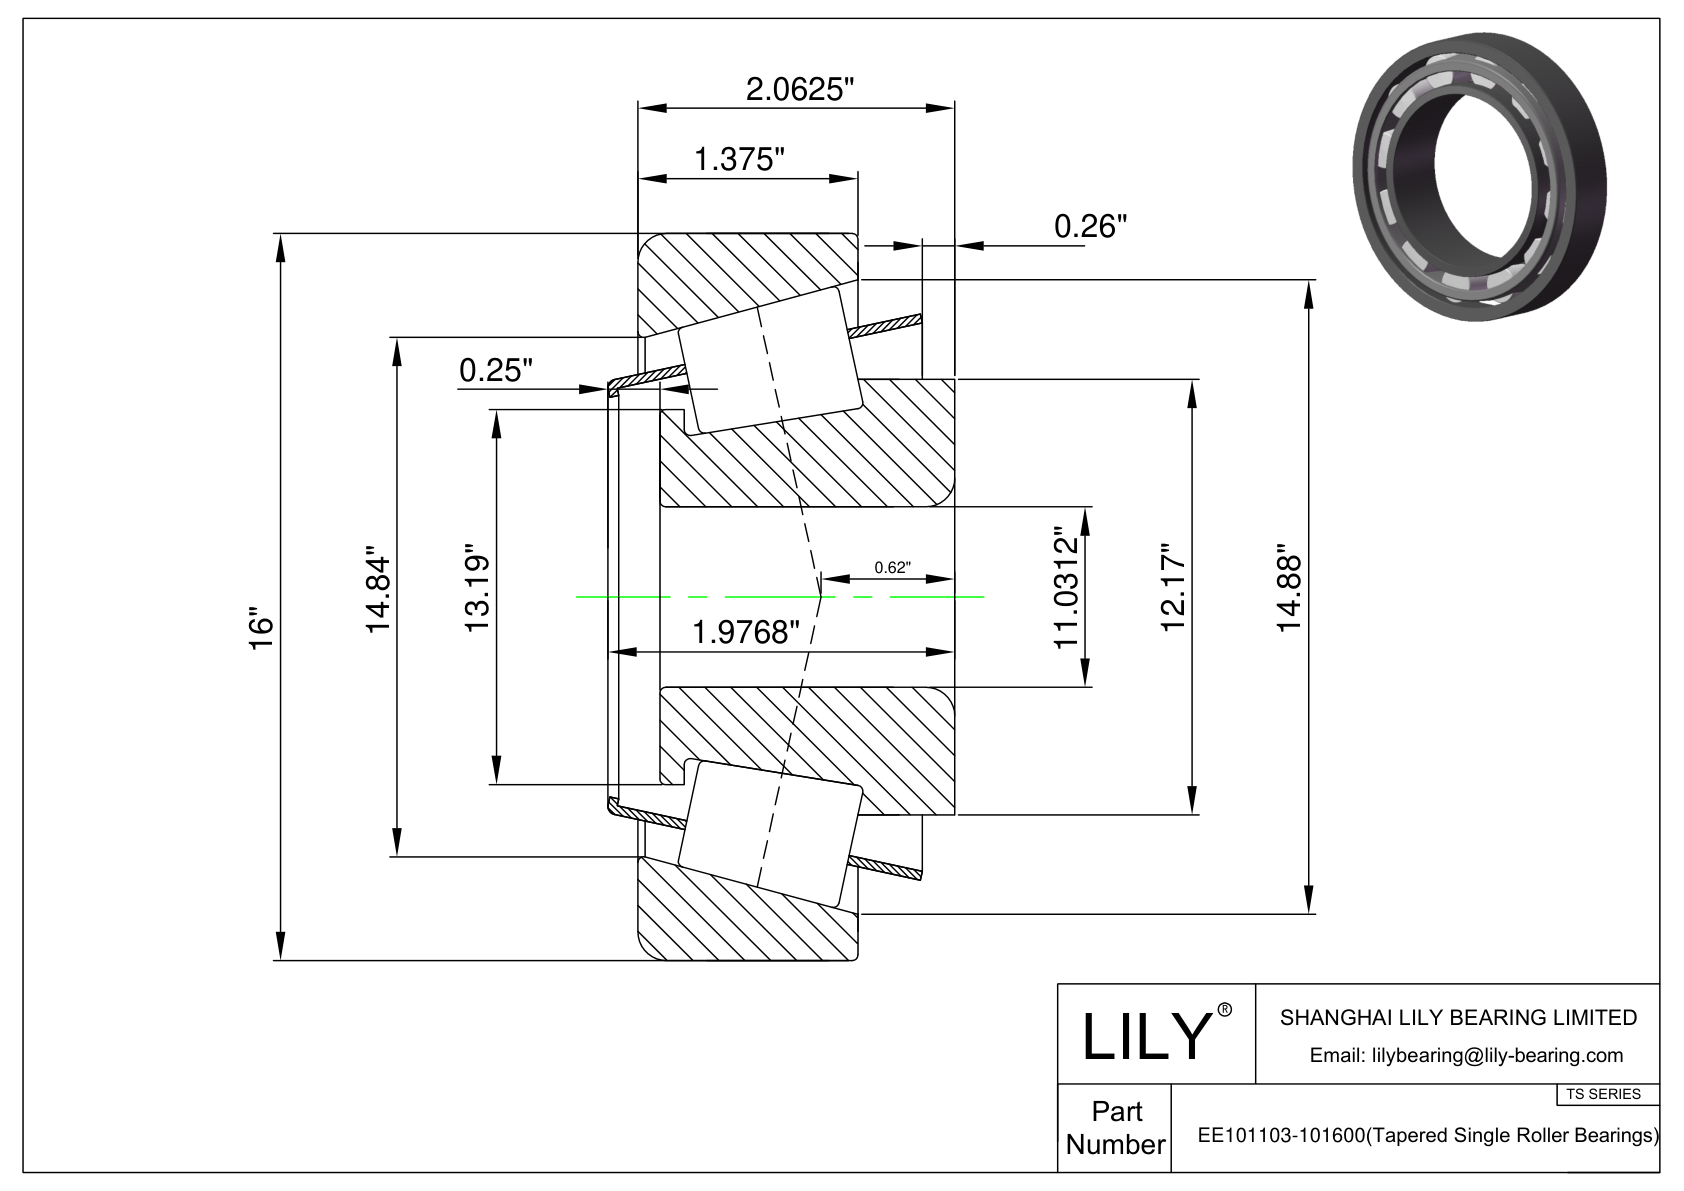 EE101103-101600 TS系列(圆锥单滚子轴承)(英制) CAD图形